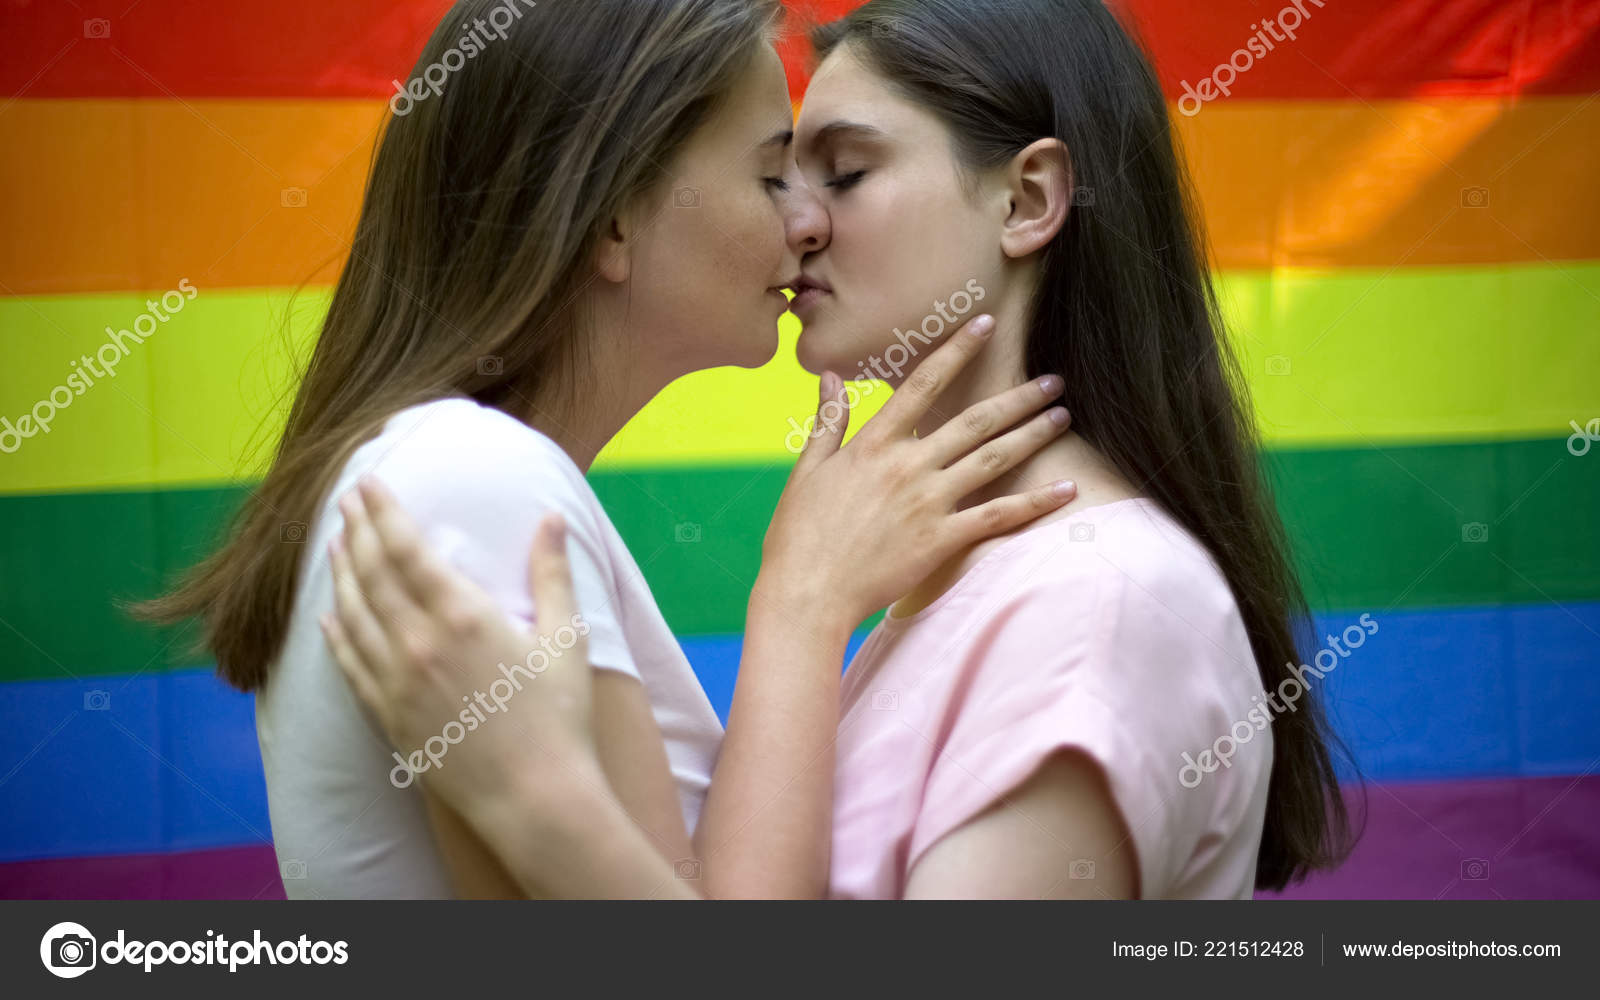 Sex lesbians kissing